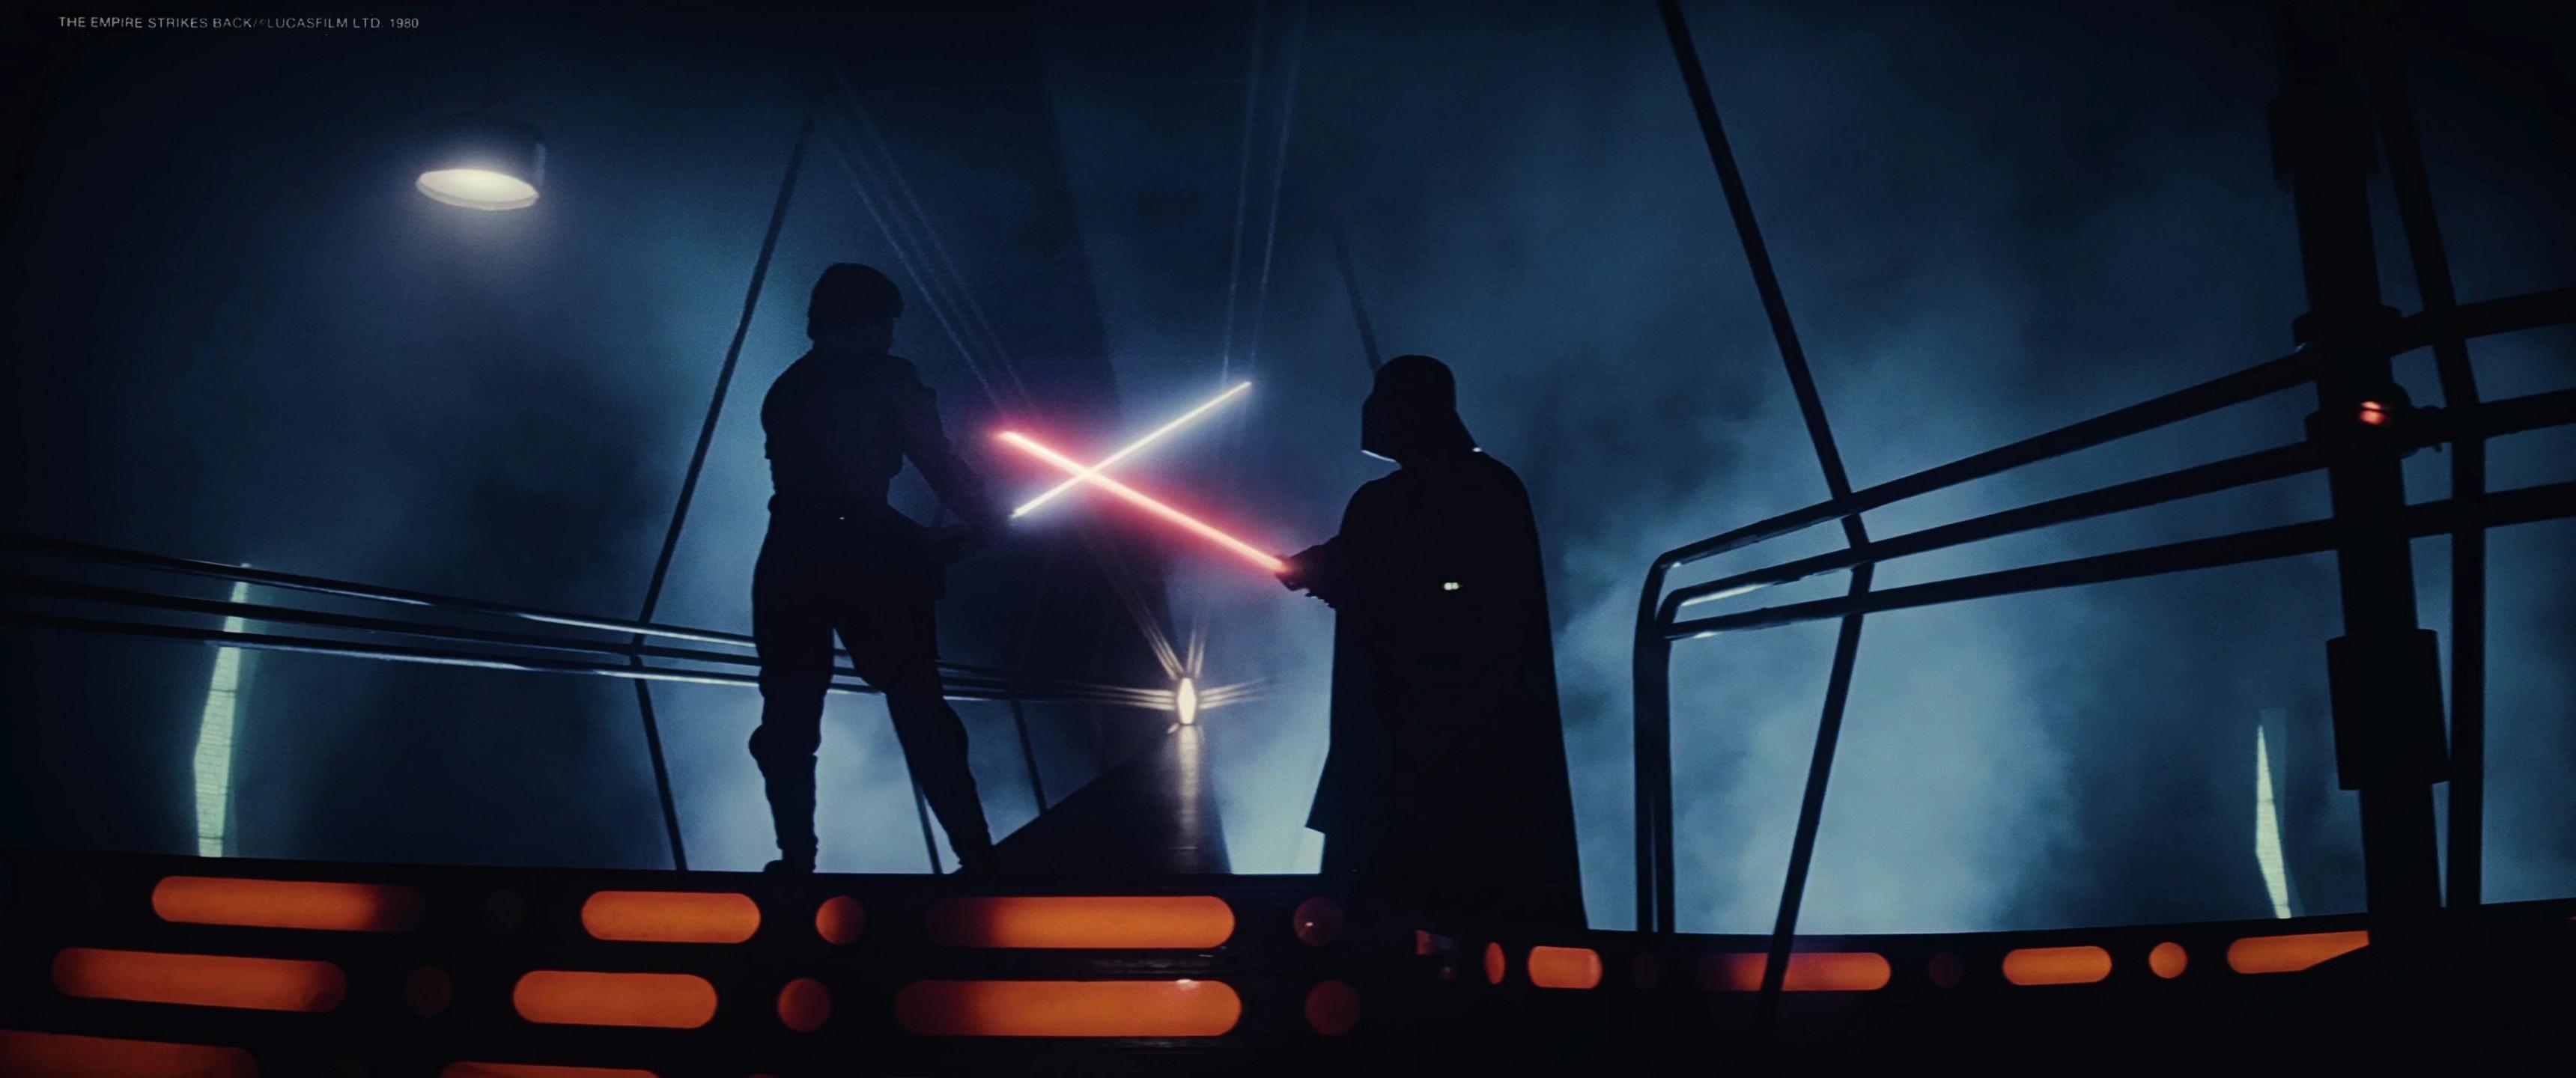 General 3440x1440 Darth Vader Luke Skywalker film stills Star Wars Heroes Star Wars lightsaber Star Wars: Episode V - The Empire Strikes Back Anakin Skywalker movies